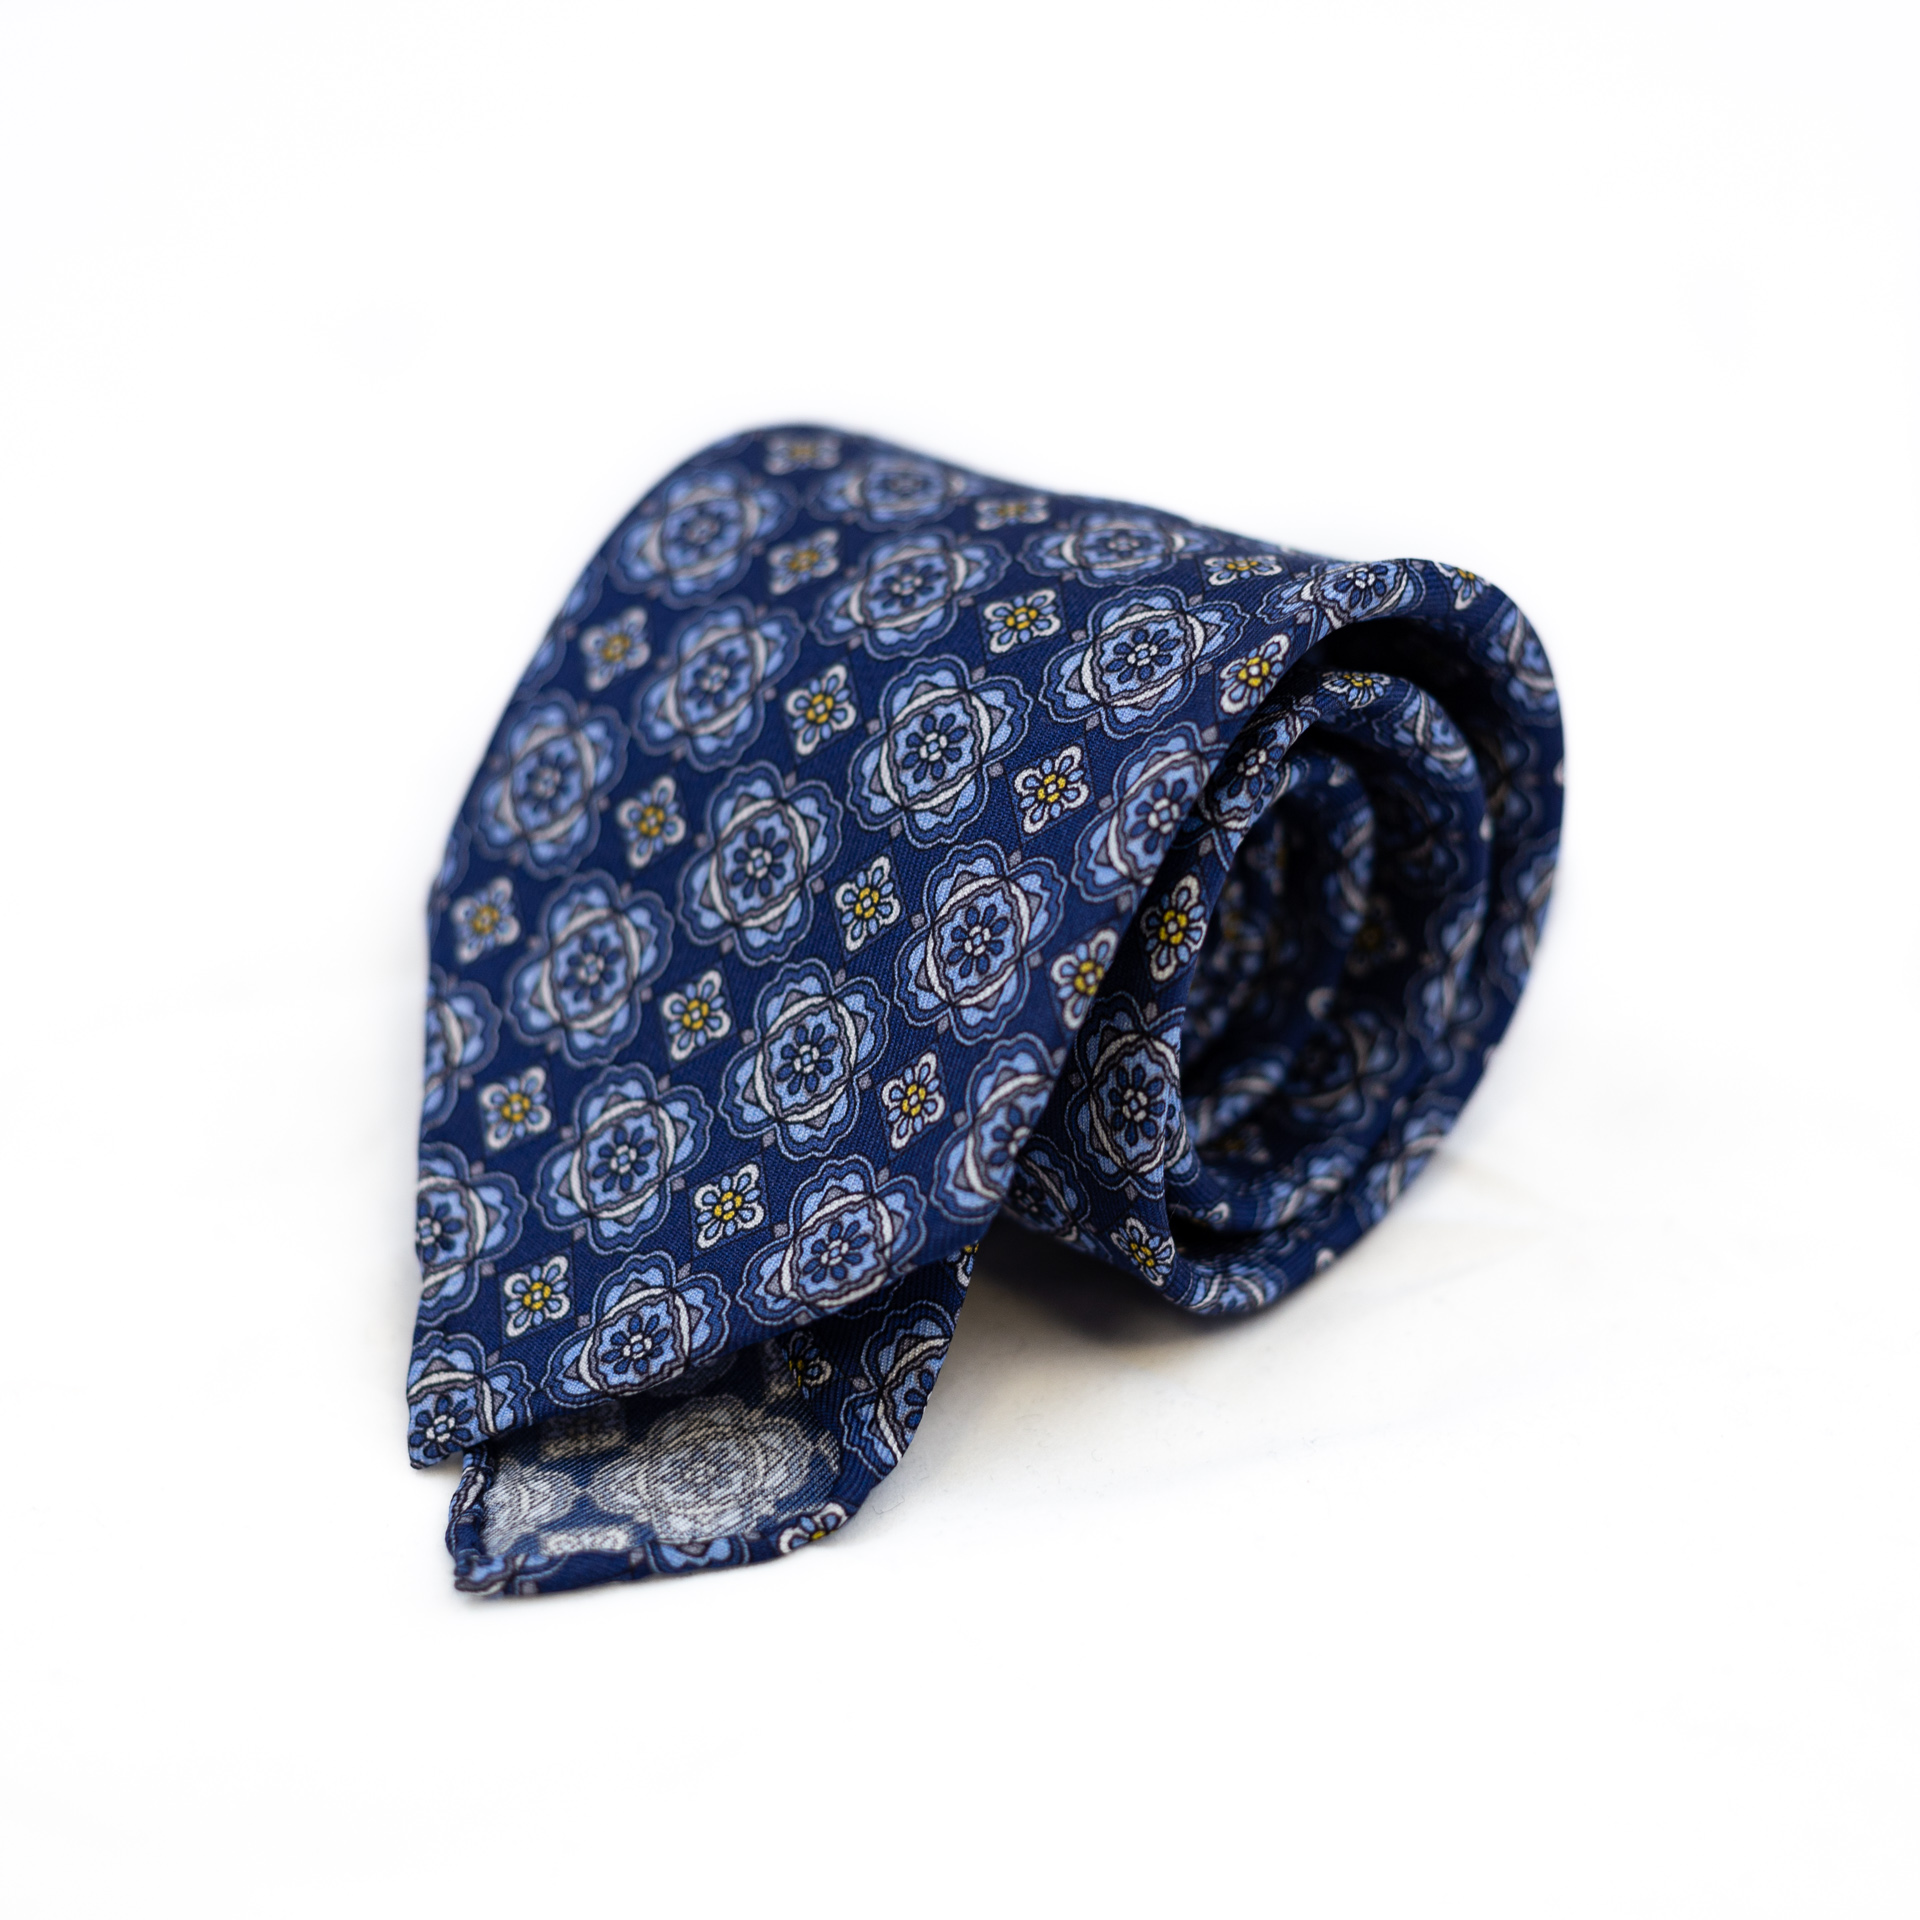 Blue 5-fold printed silk tie folded